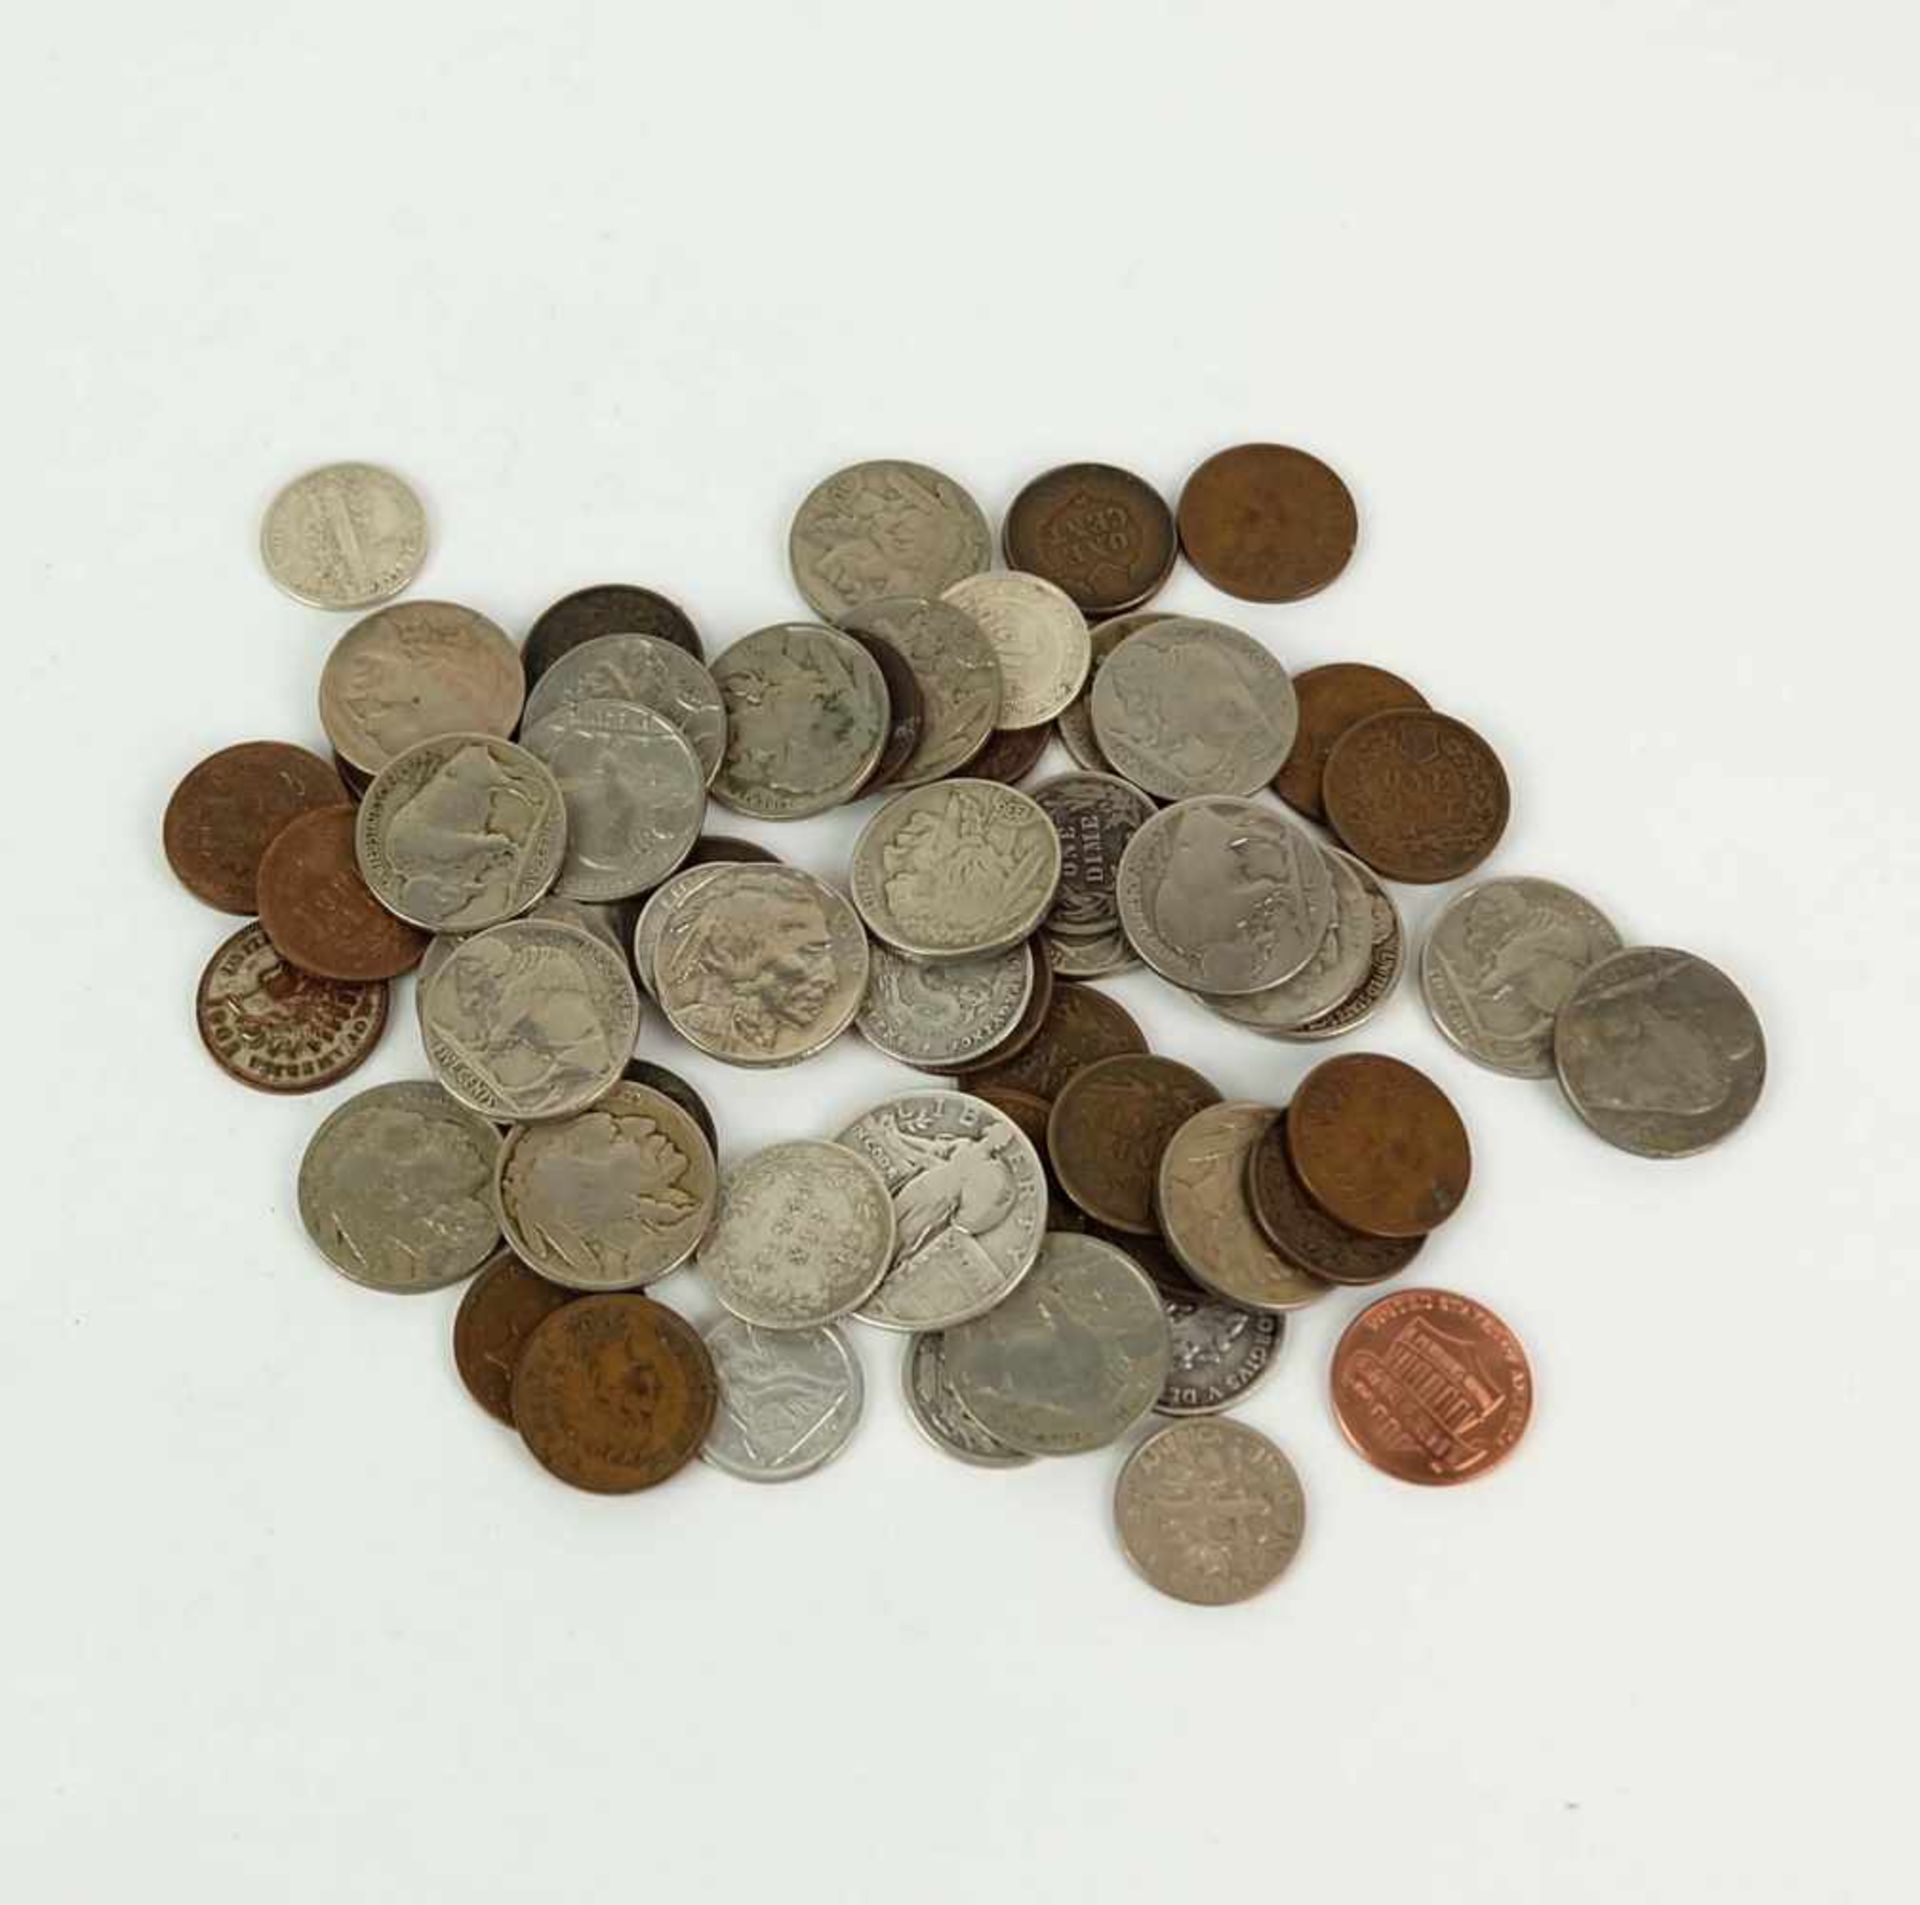 USA, 55 Kleinmünzen, 24x 1 Cent, 23x 5 Cent, 7x Dime, 1x Quarter $ aus 1857 -1962 (1x 2015), dazu